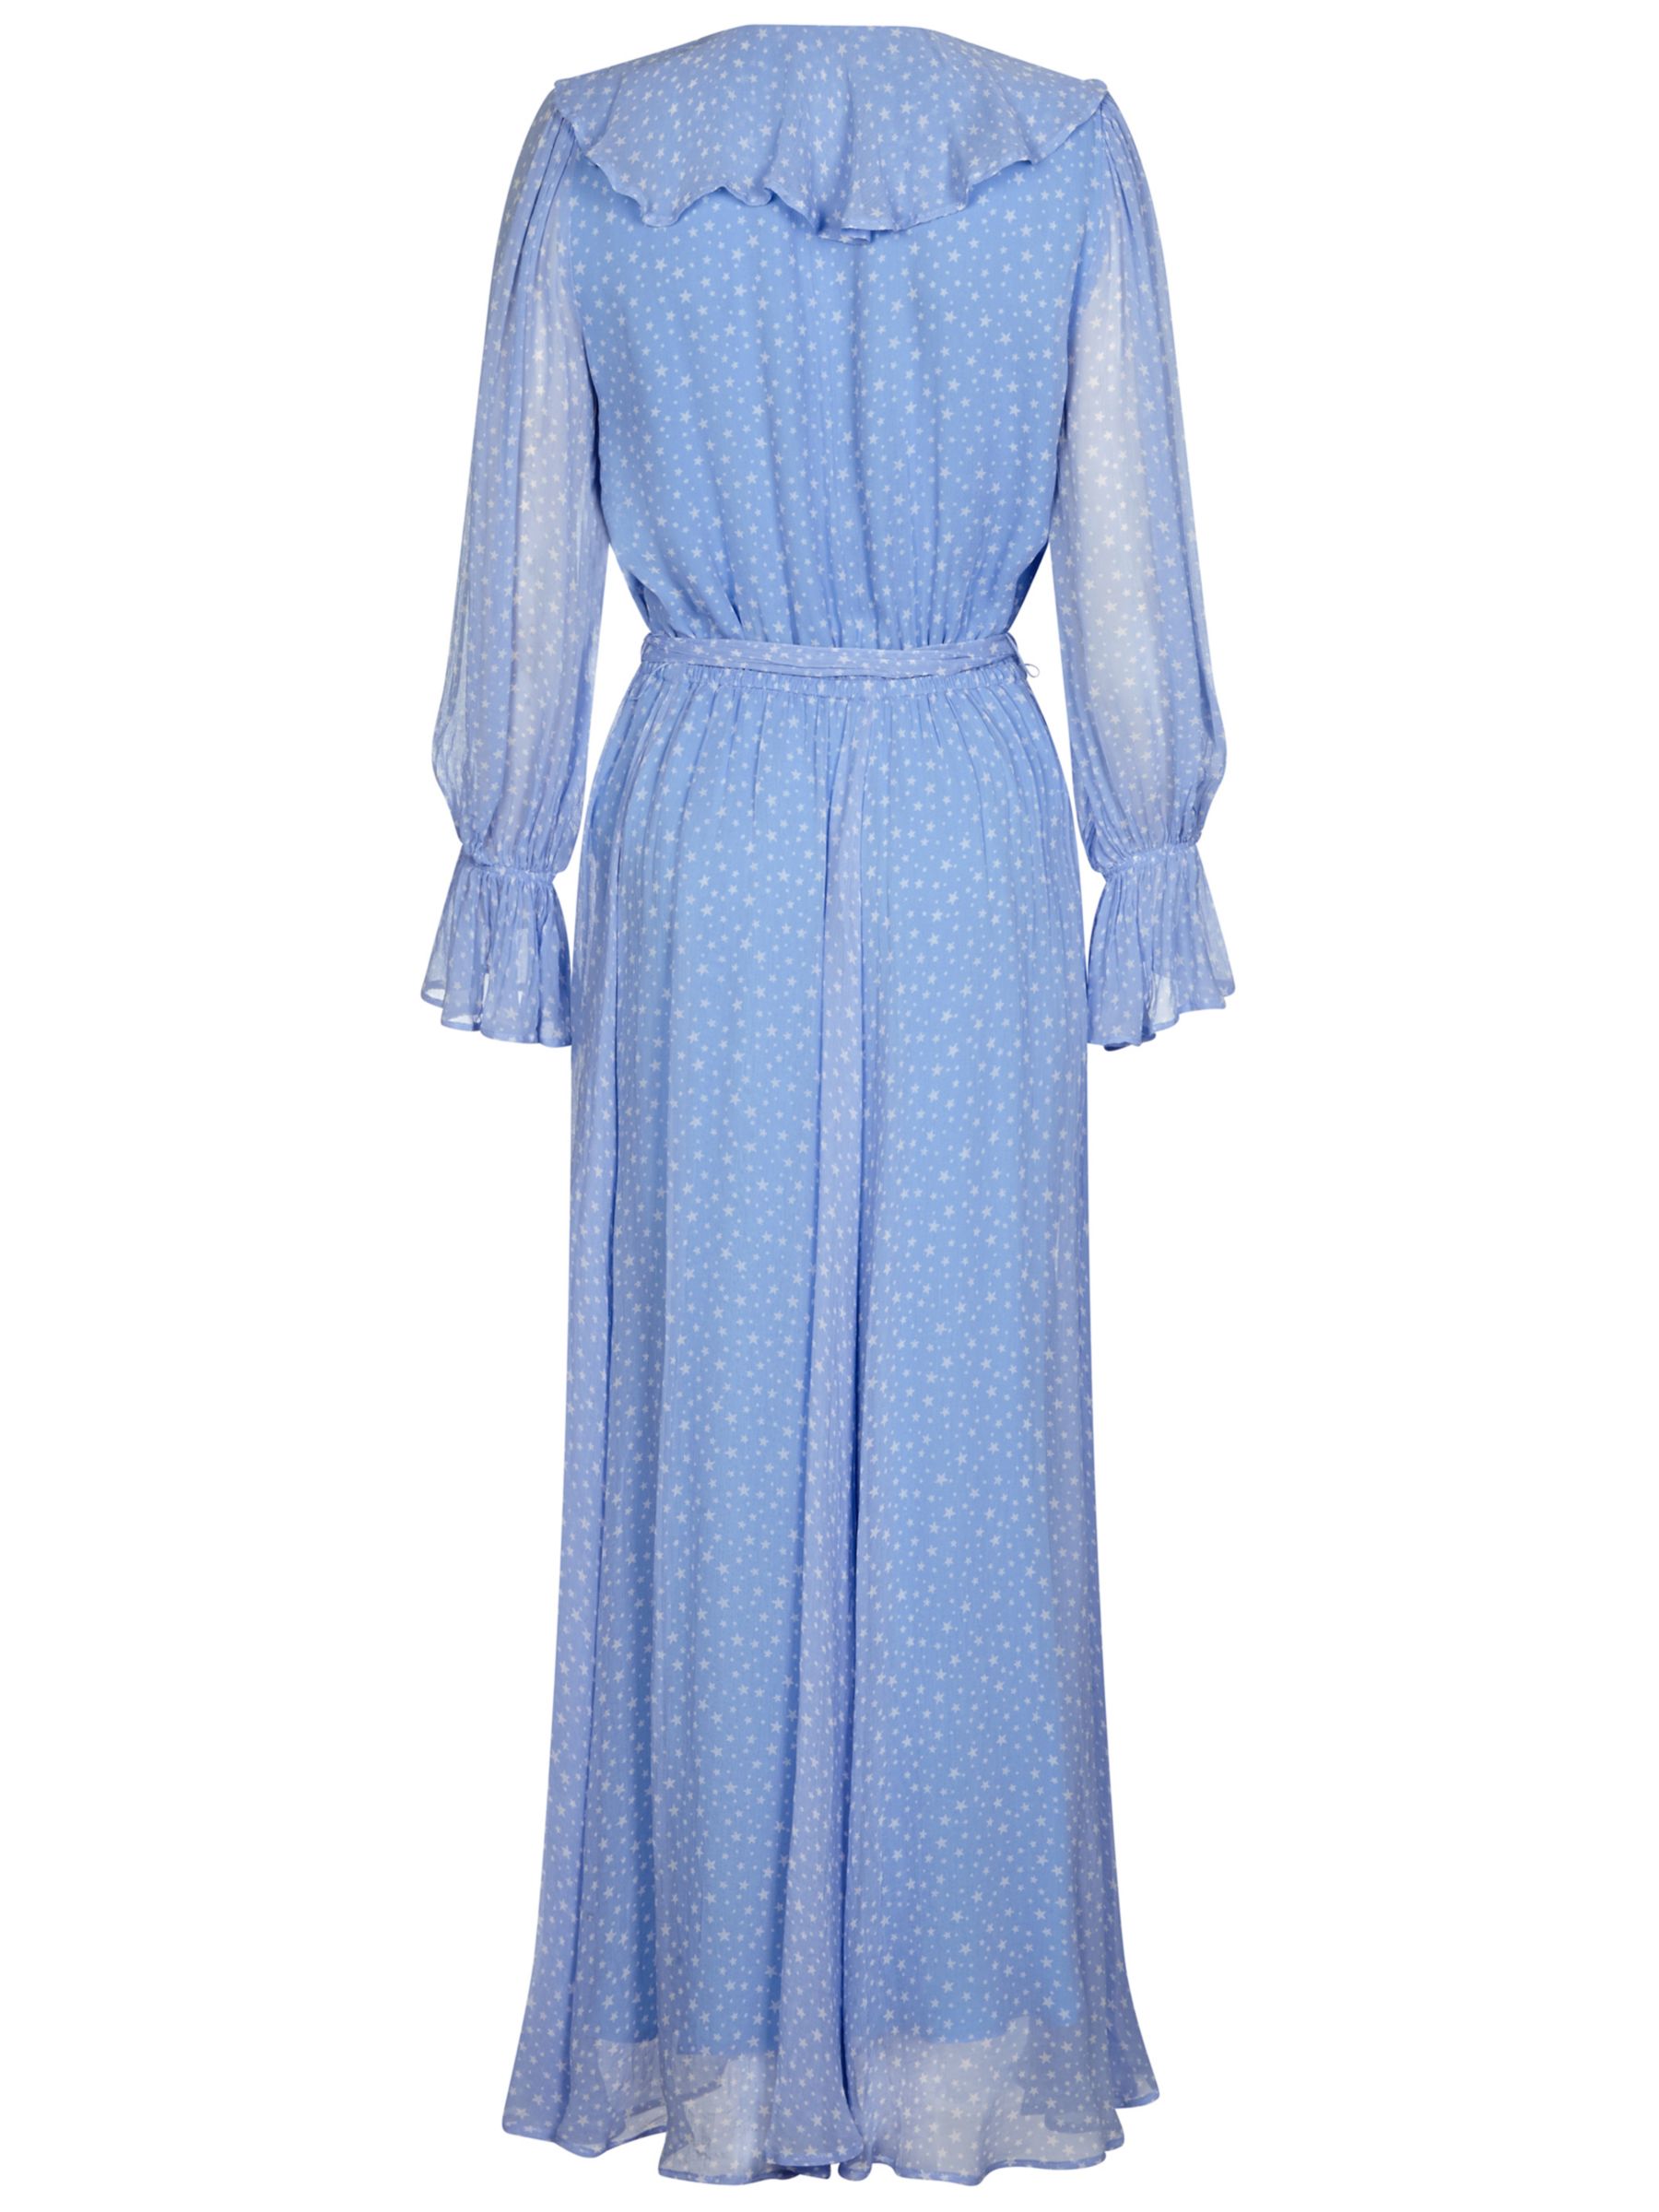 Ghost Su Star Print Dress, Blue at John Lewis & Partners